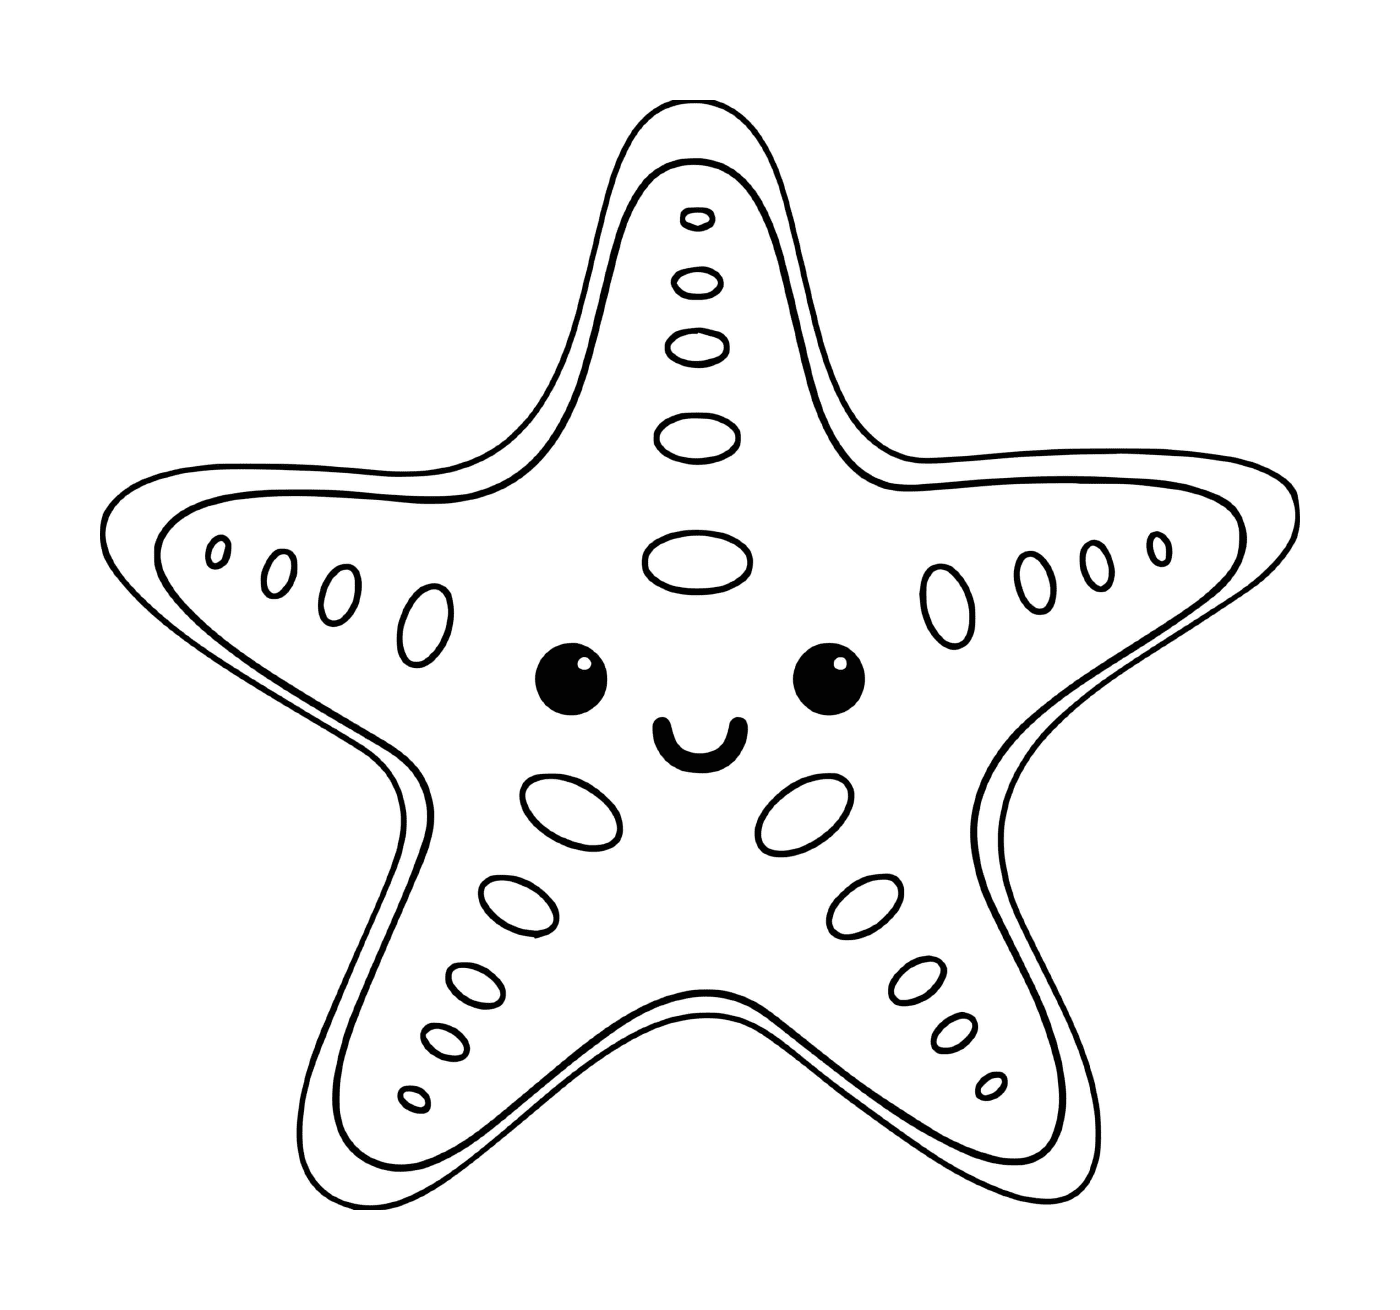  A star of sea Asteroidea easy to achieve 